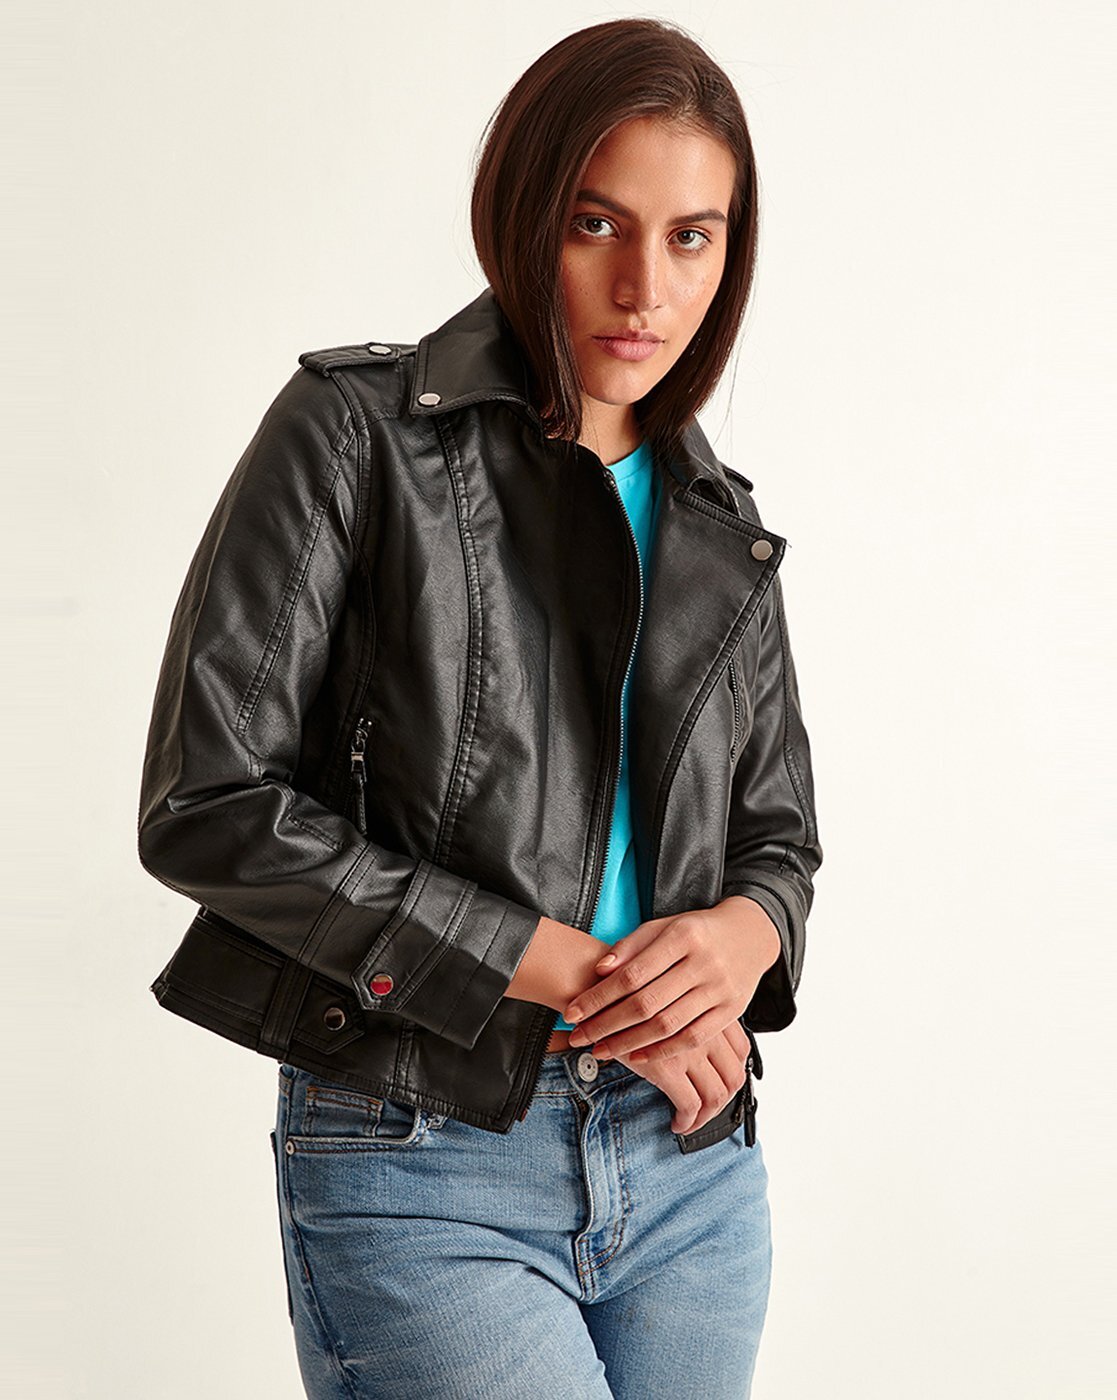 Blue Valentine Ryan Gosling Biker Black Leather Jacket for Mens, All Sizes  | eBay